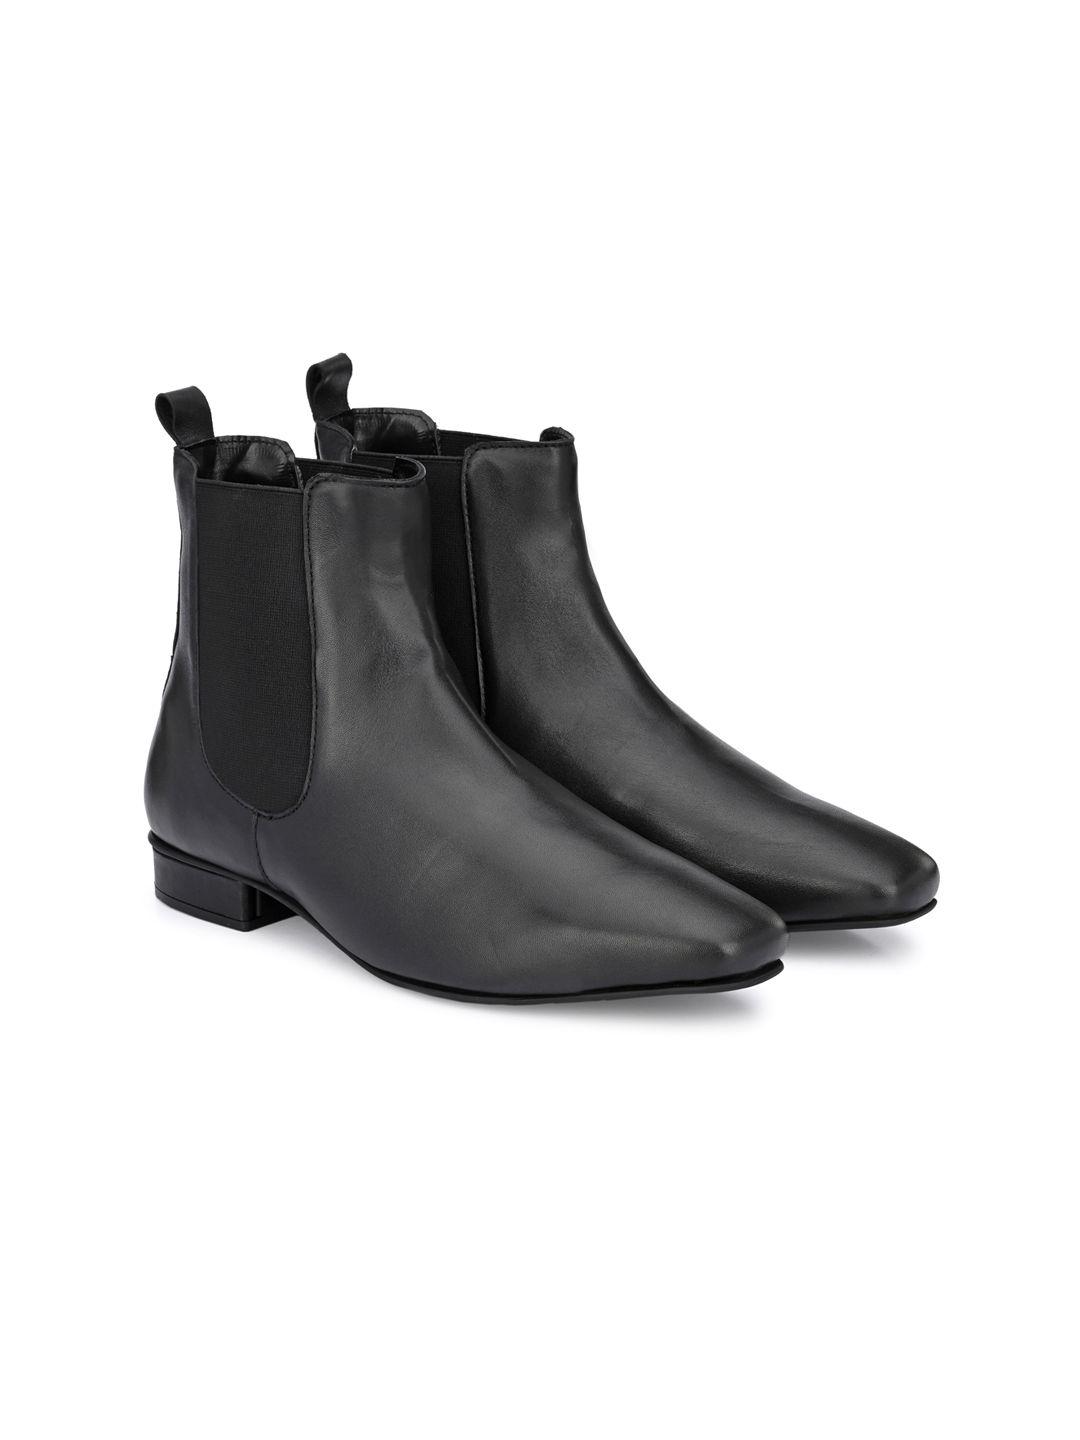 carlo romano women black leather chelsea boots